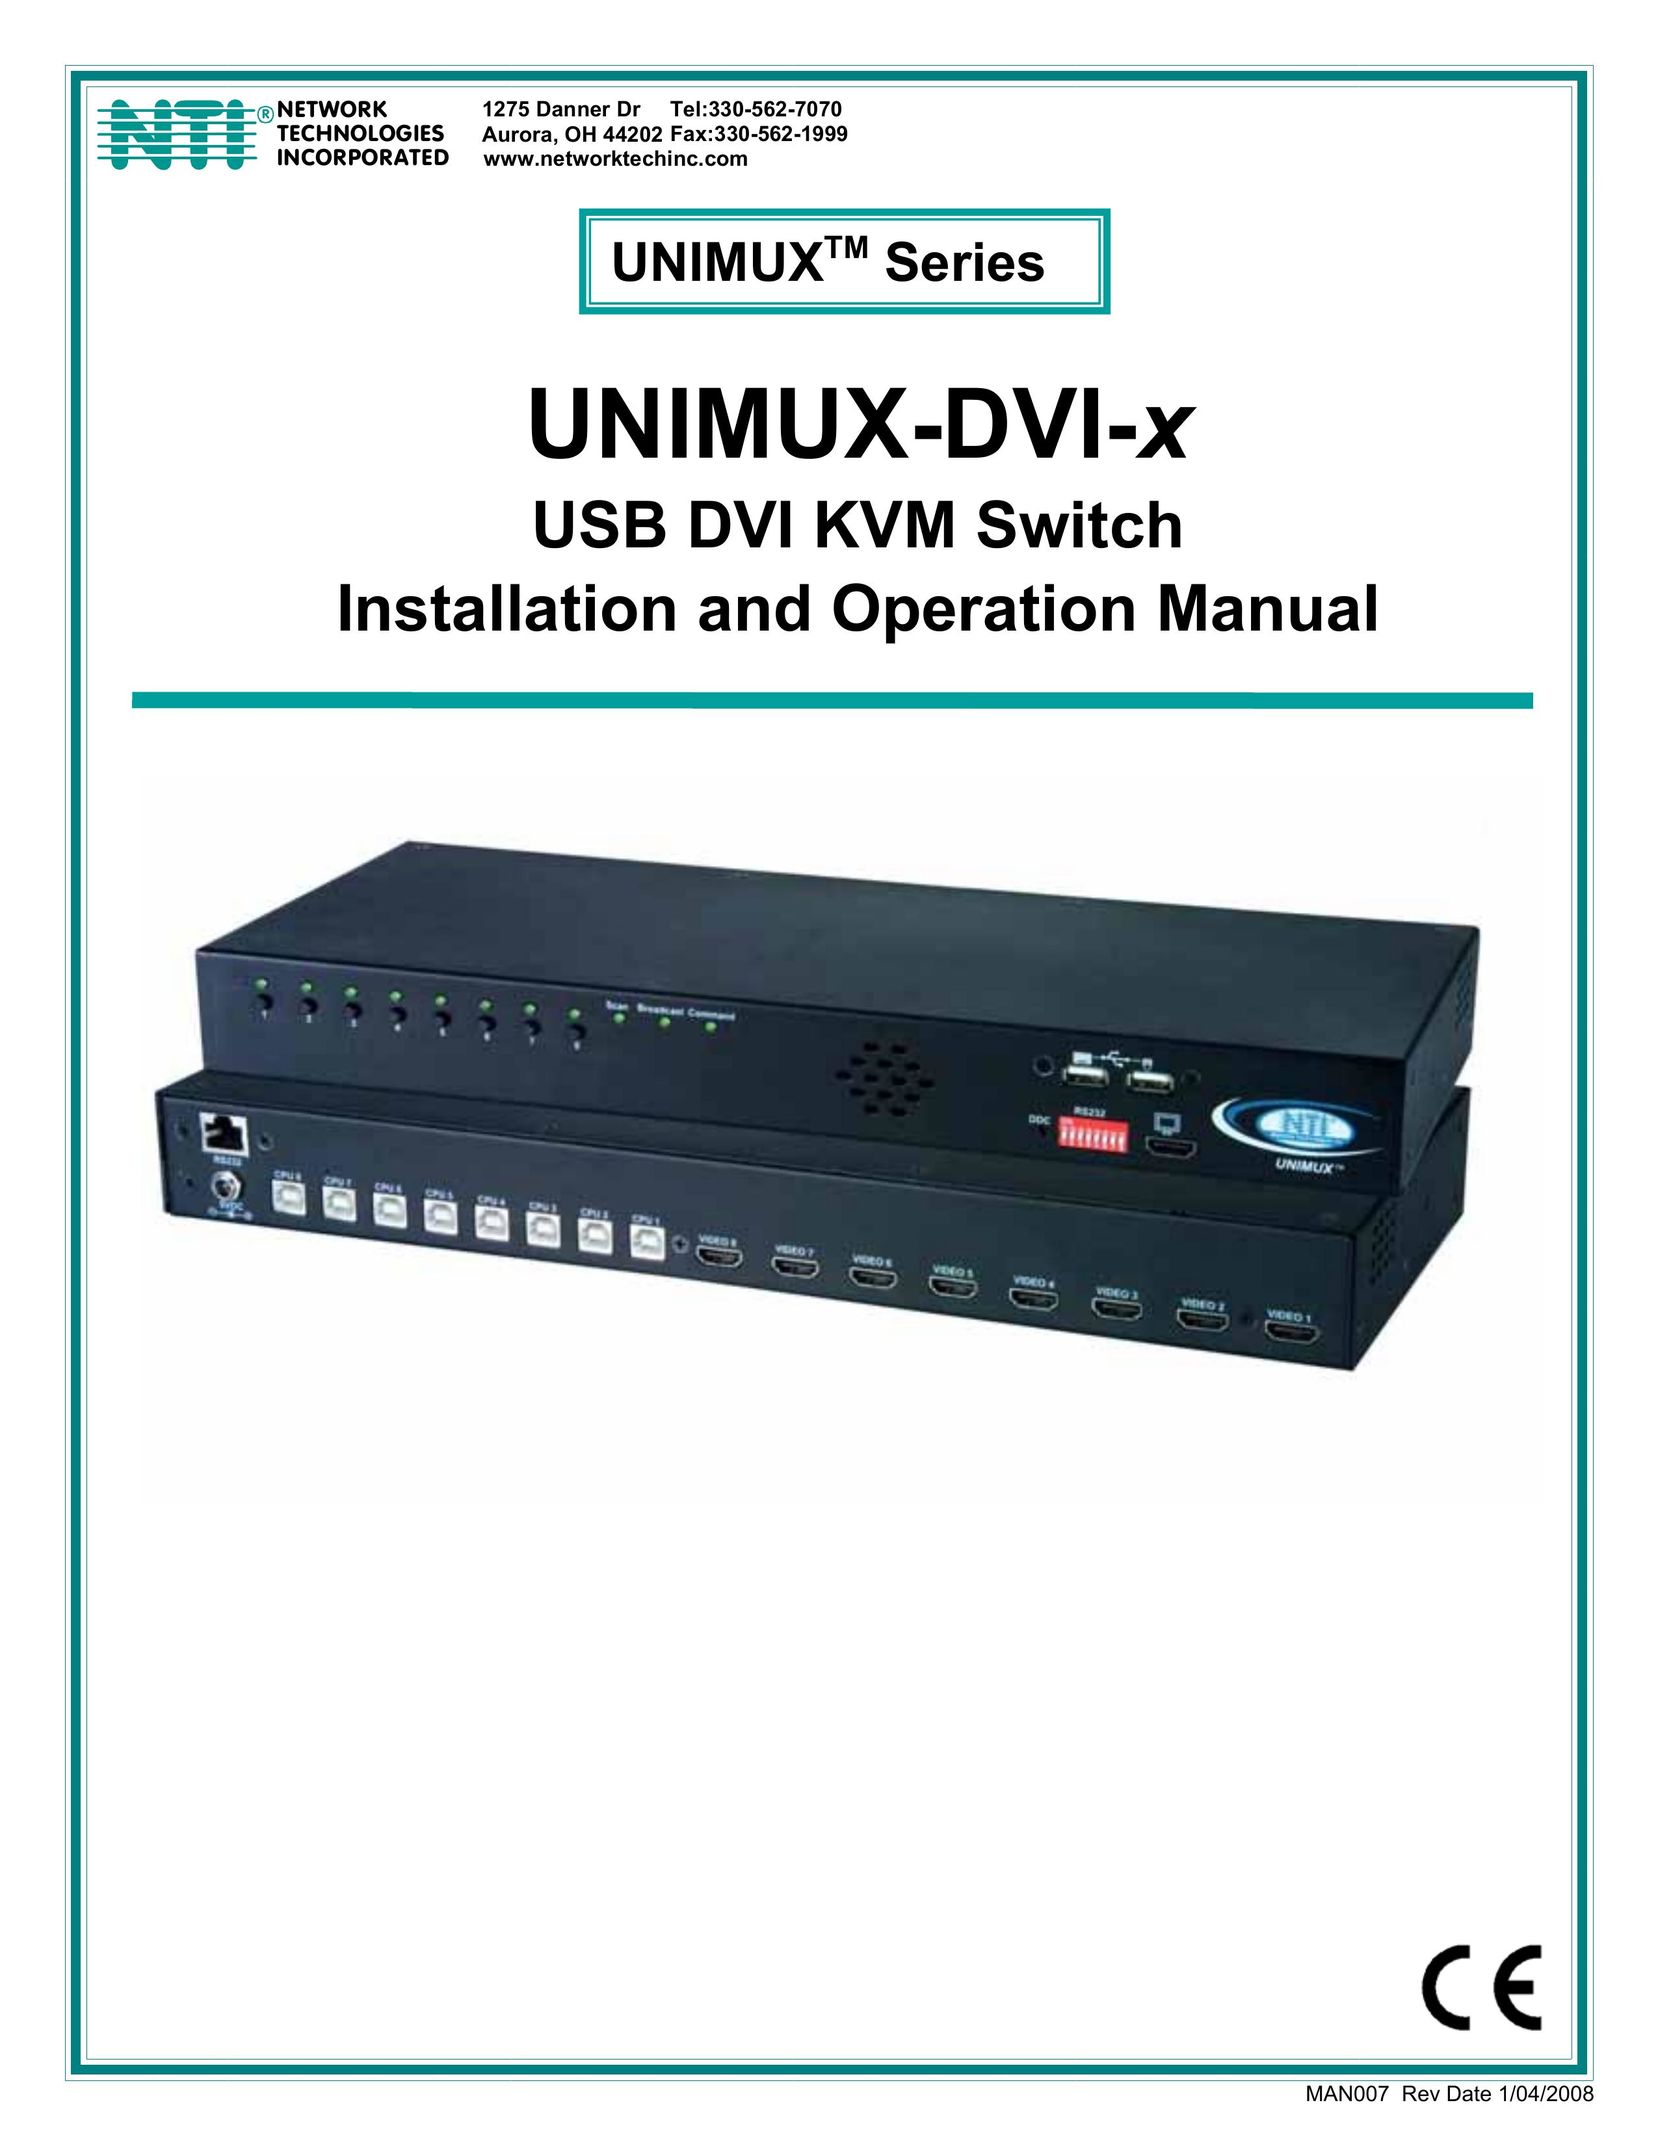 Network Technologies UNIMUX-DVI-x Switch User Manual